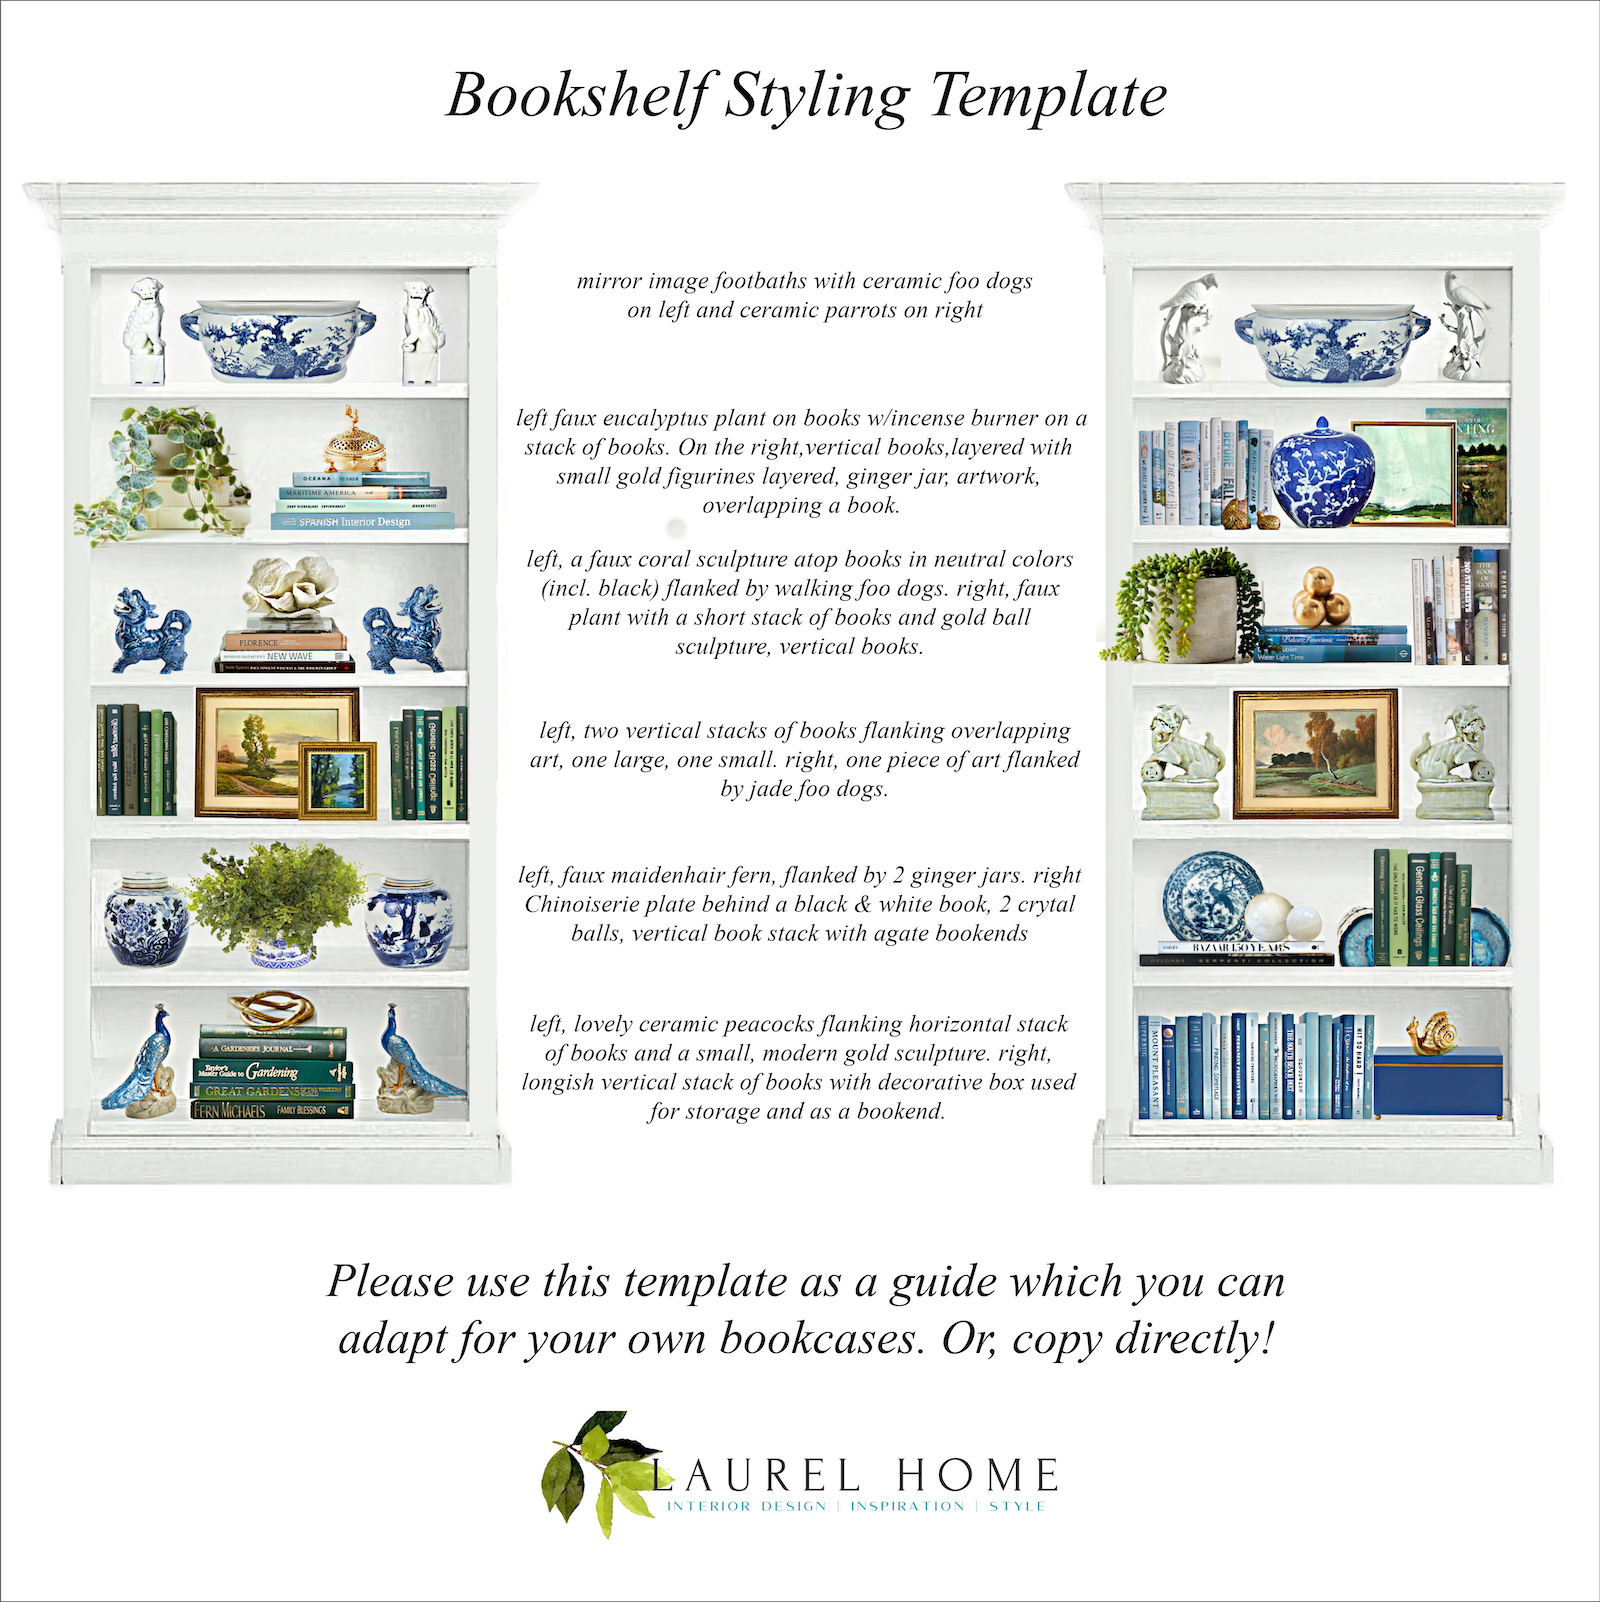 bookshelf styling template explained